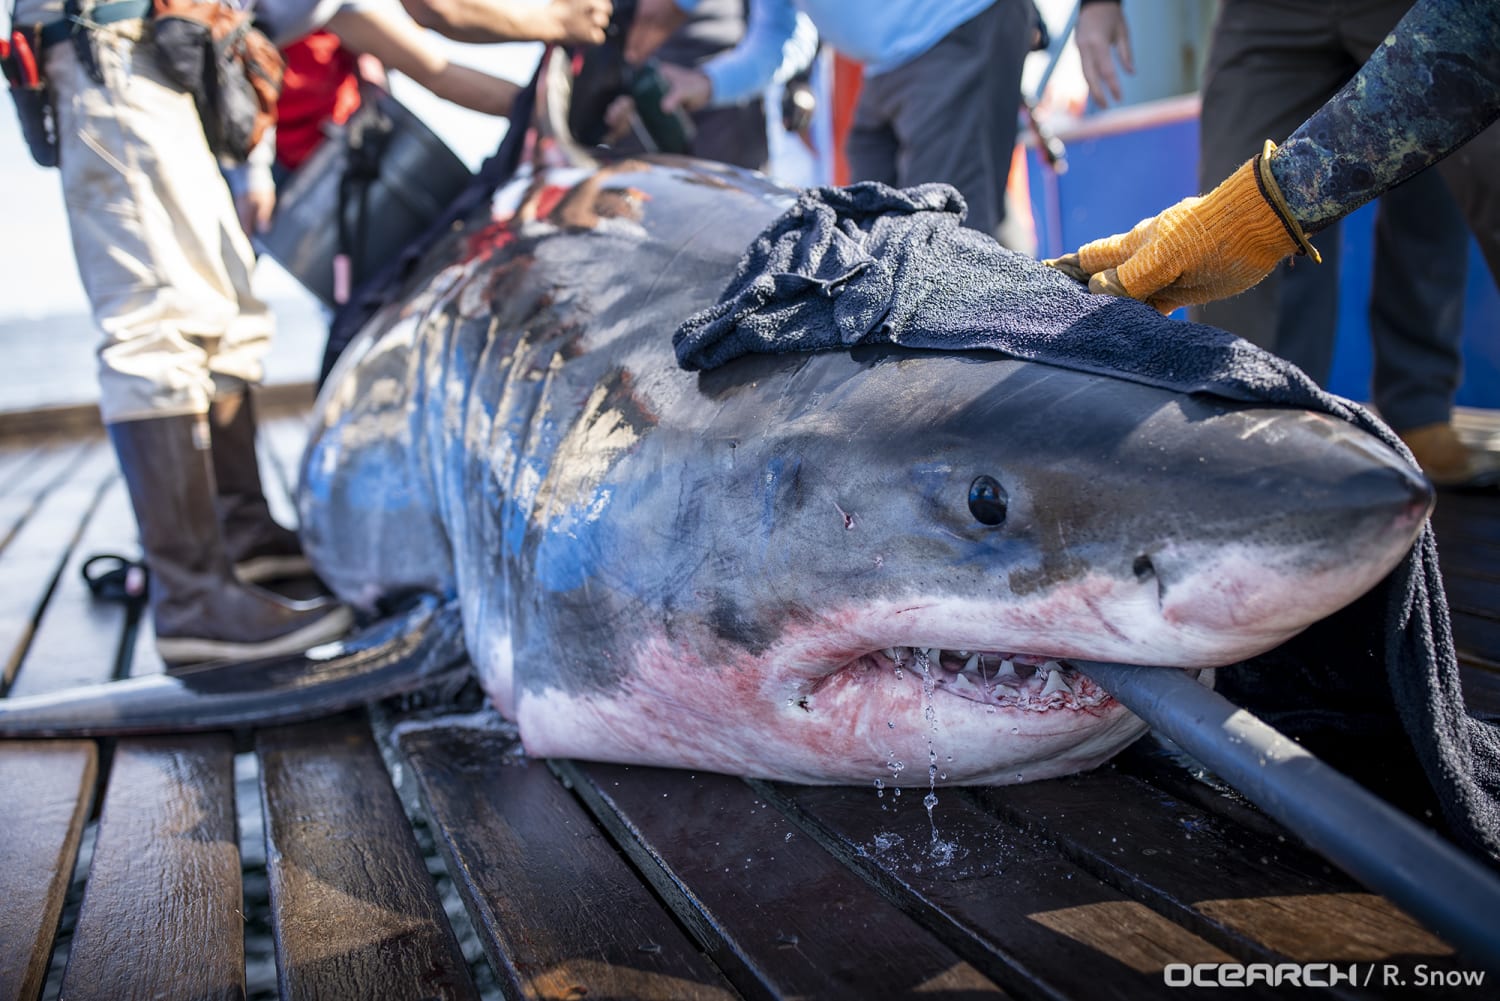 15-foot-long great white shark Unama'ki tracked near Bermuda on journey into the open ocean